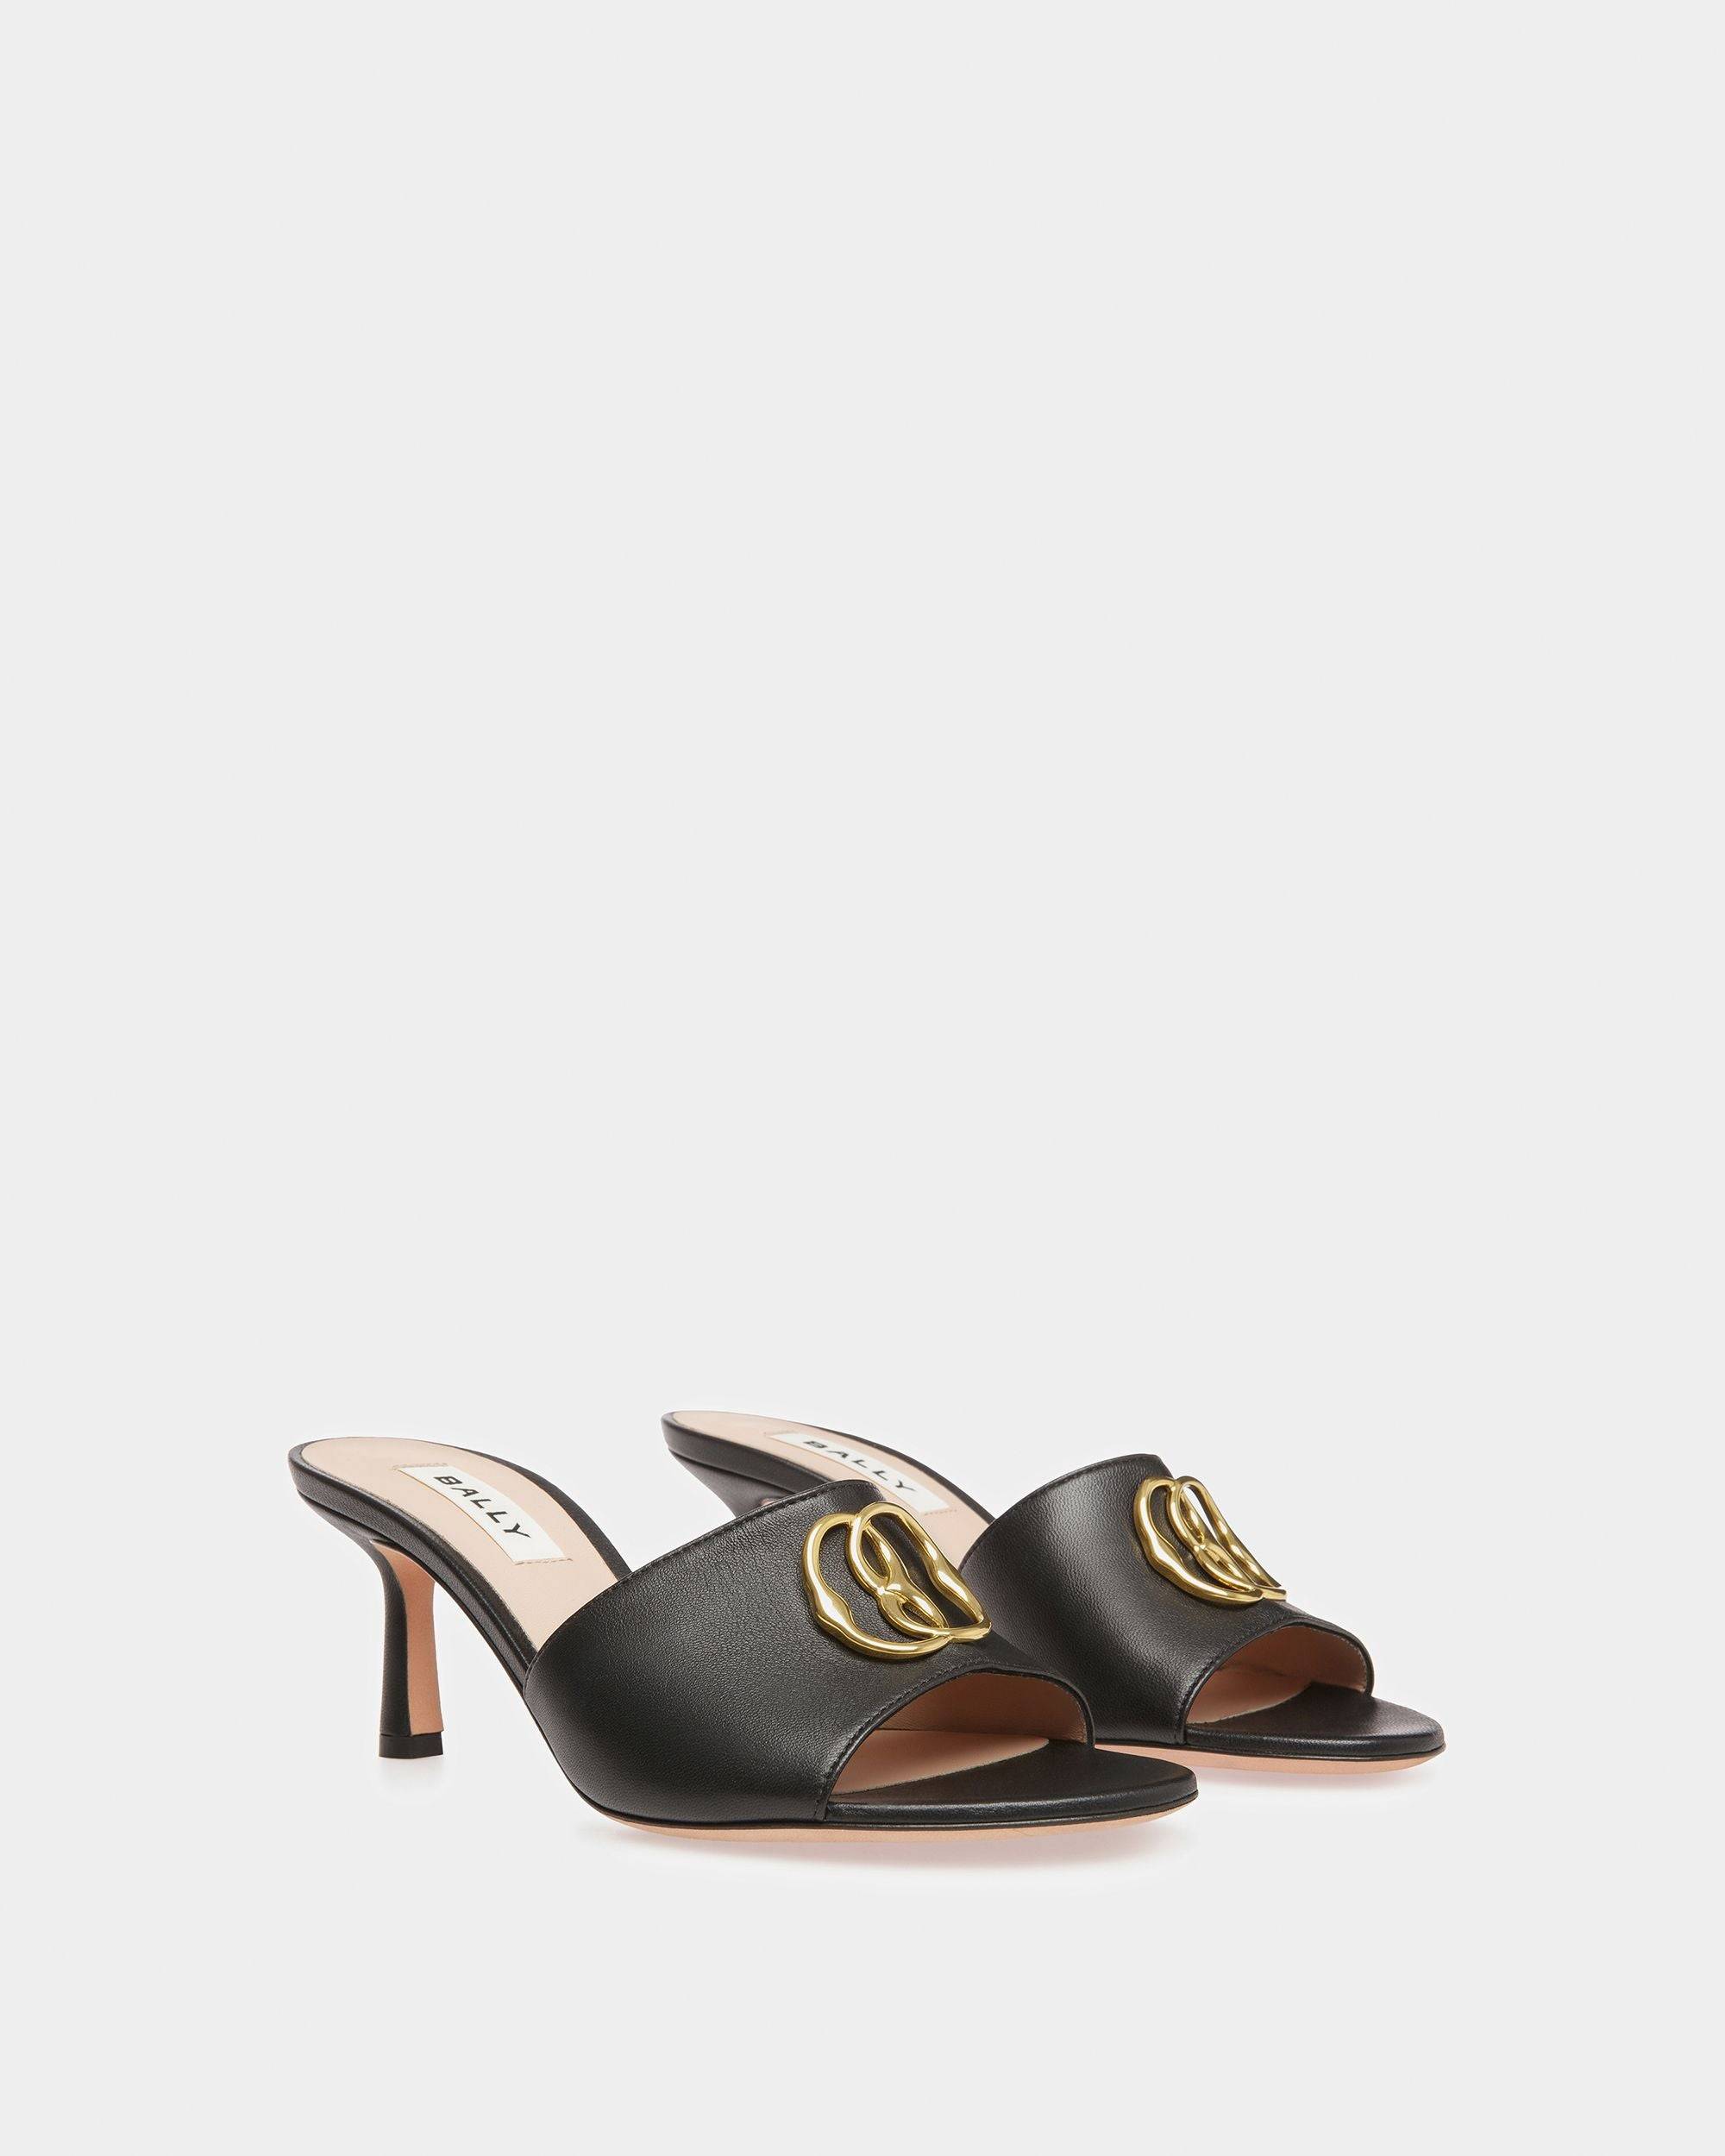 Geha | Women's Emblem Sandals | Black Leather | Bally | Still Life 3/4 Front